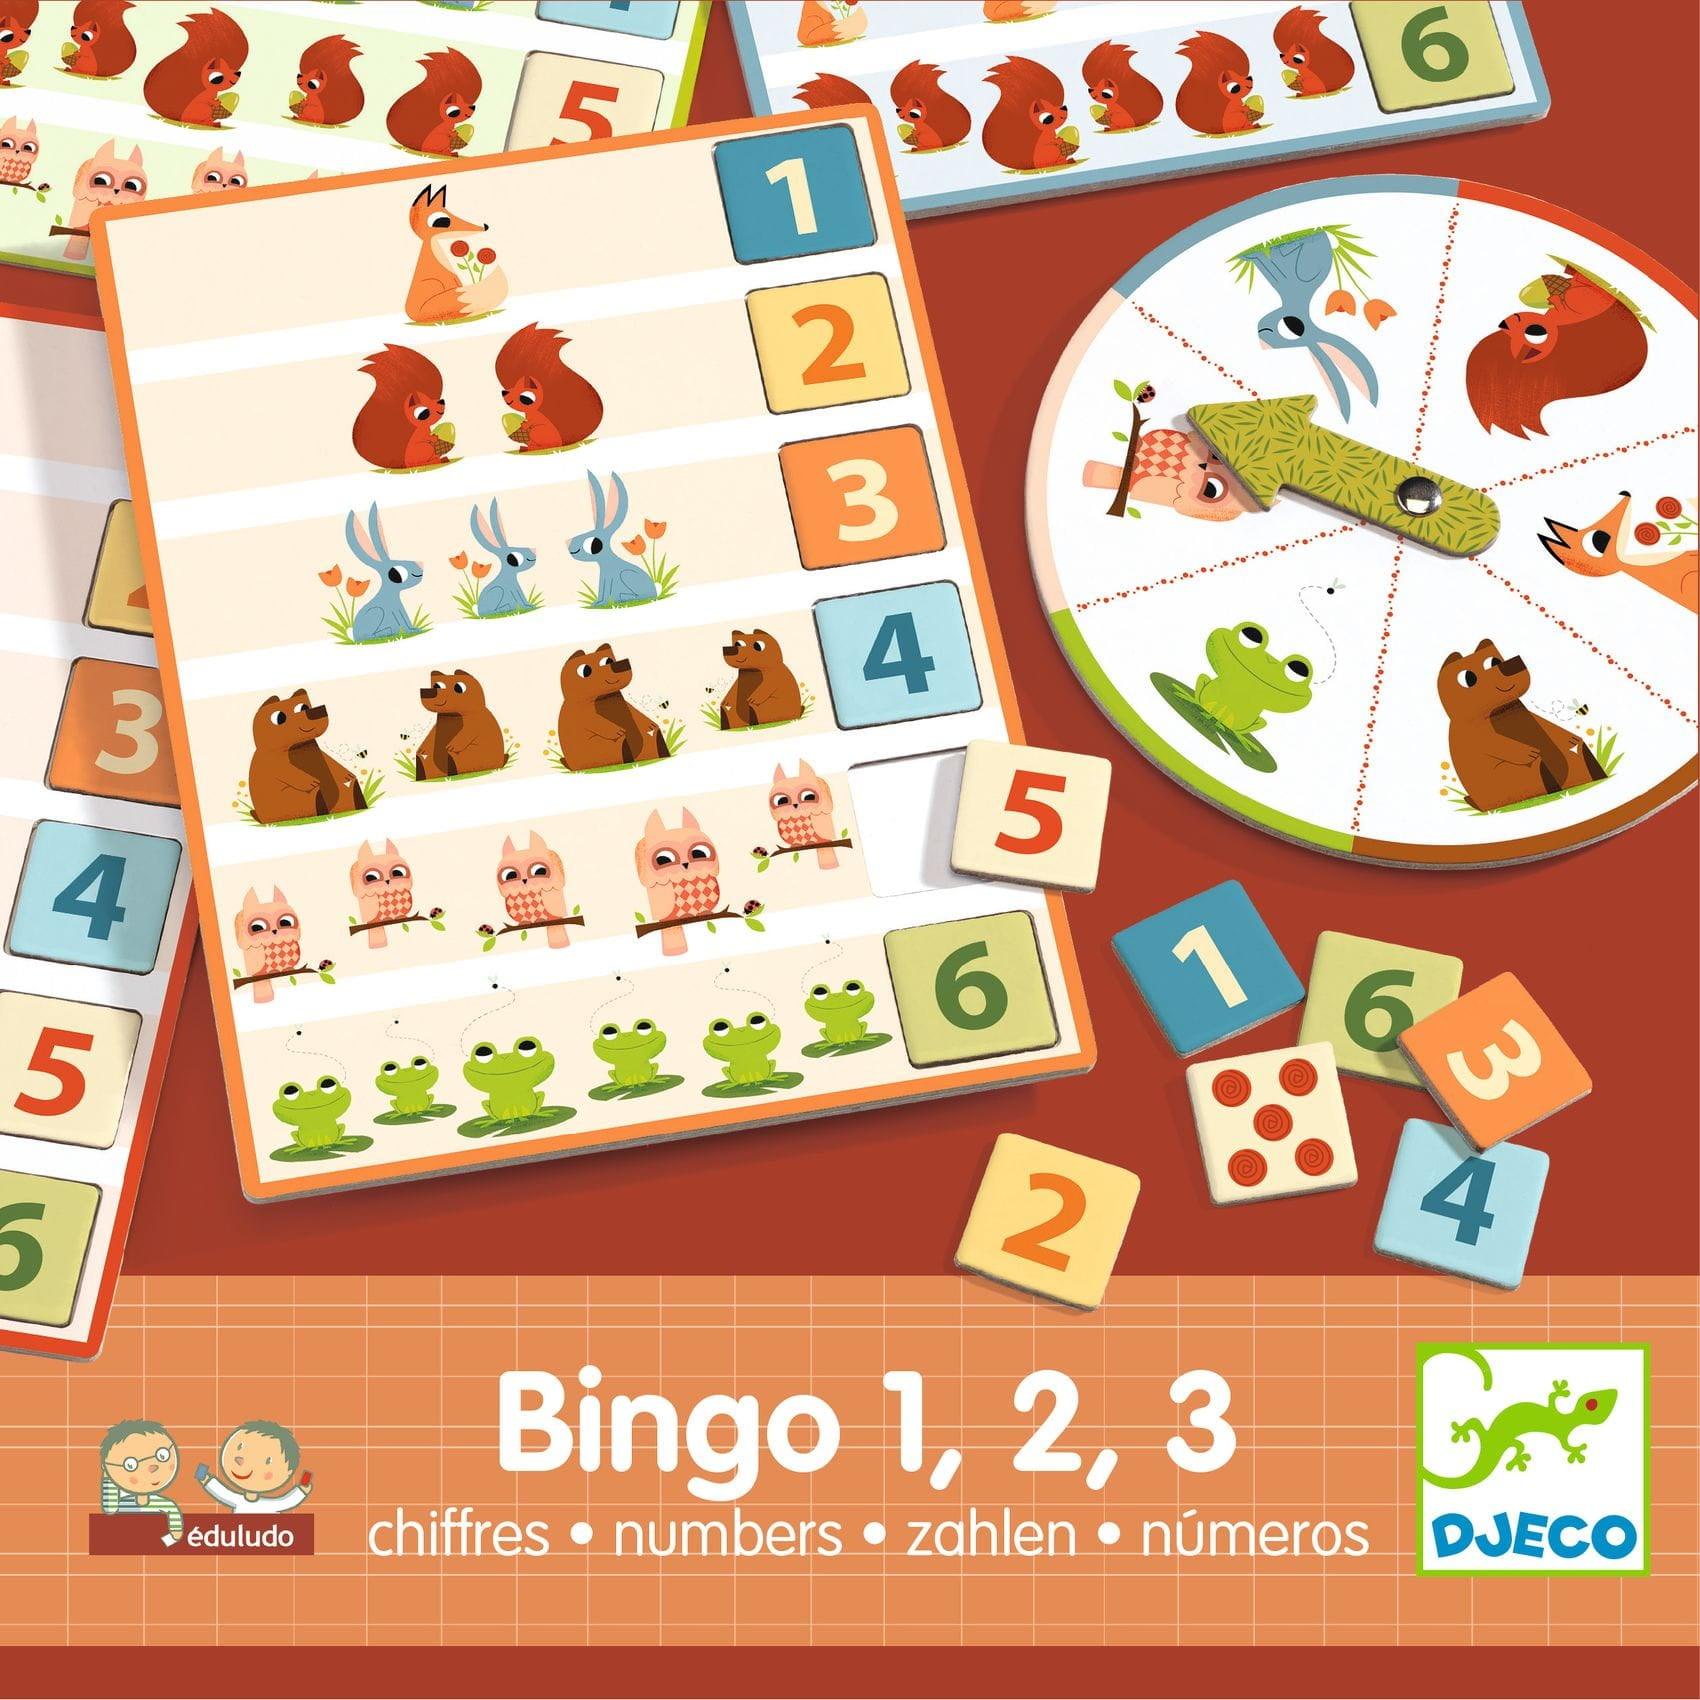 Djeco: Eduludo Bingo 1,2,3 Juego educativo